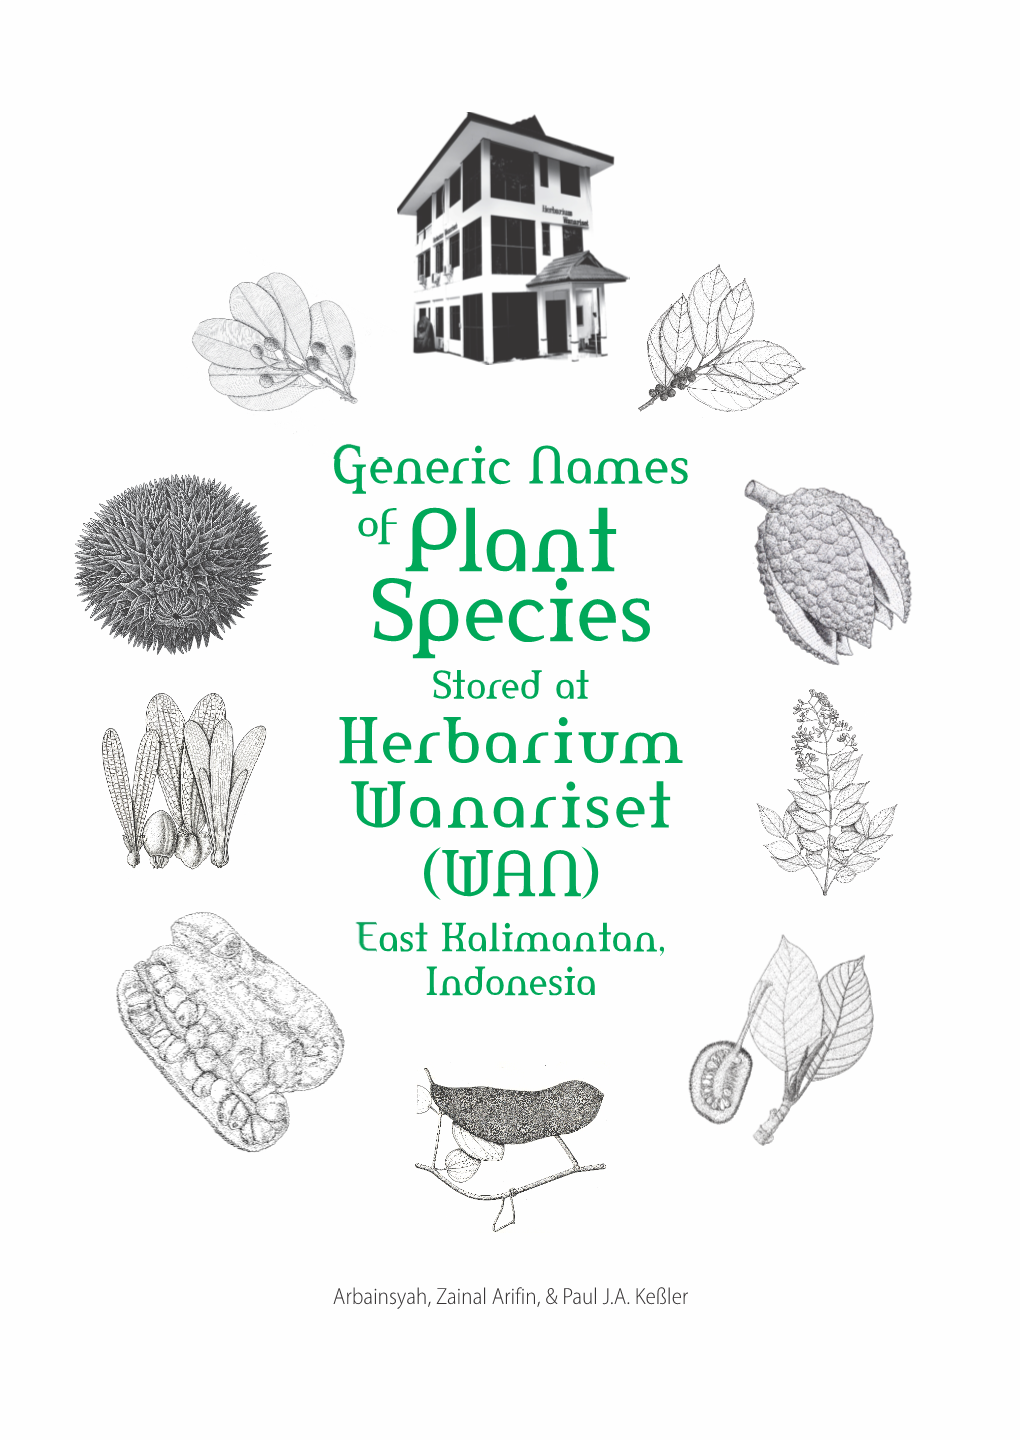 Plant Species Stored at Herbarium Wanariset (WAN) East Kalimantan, Indonesia